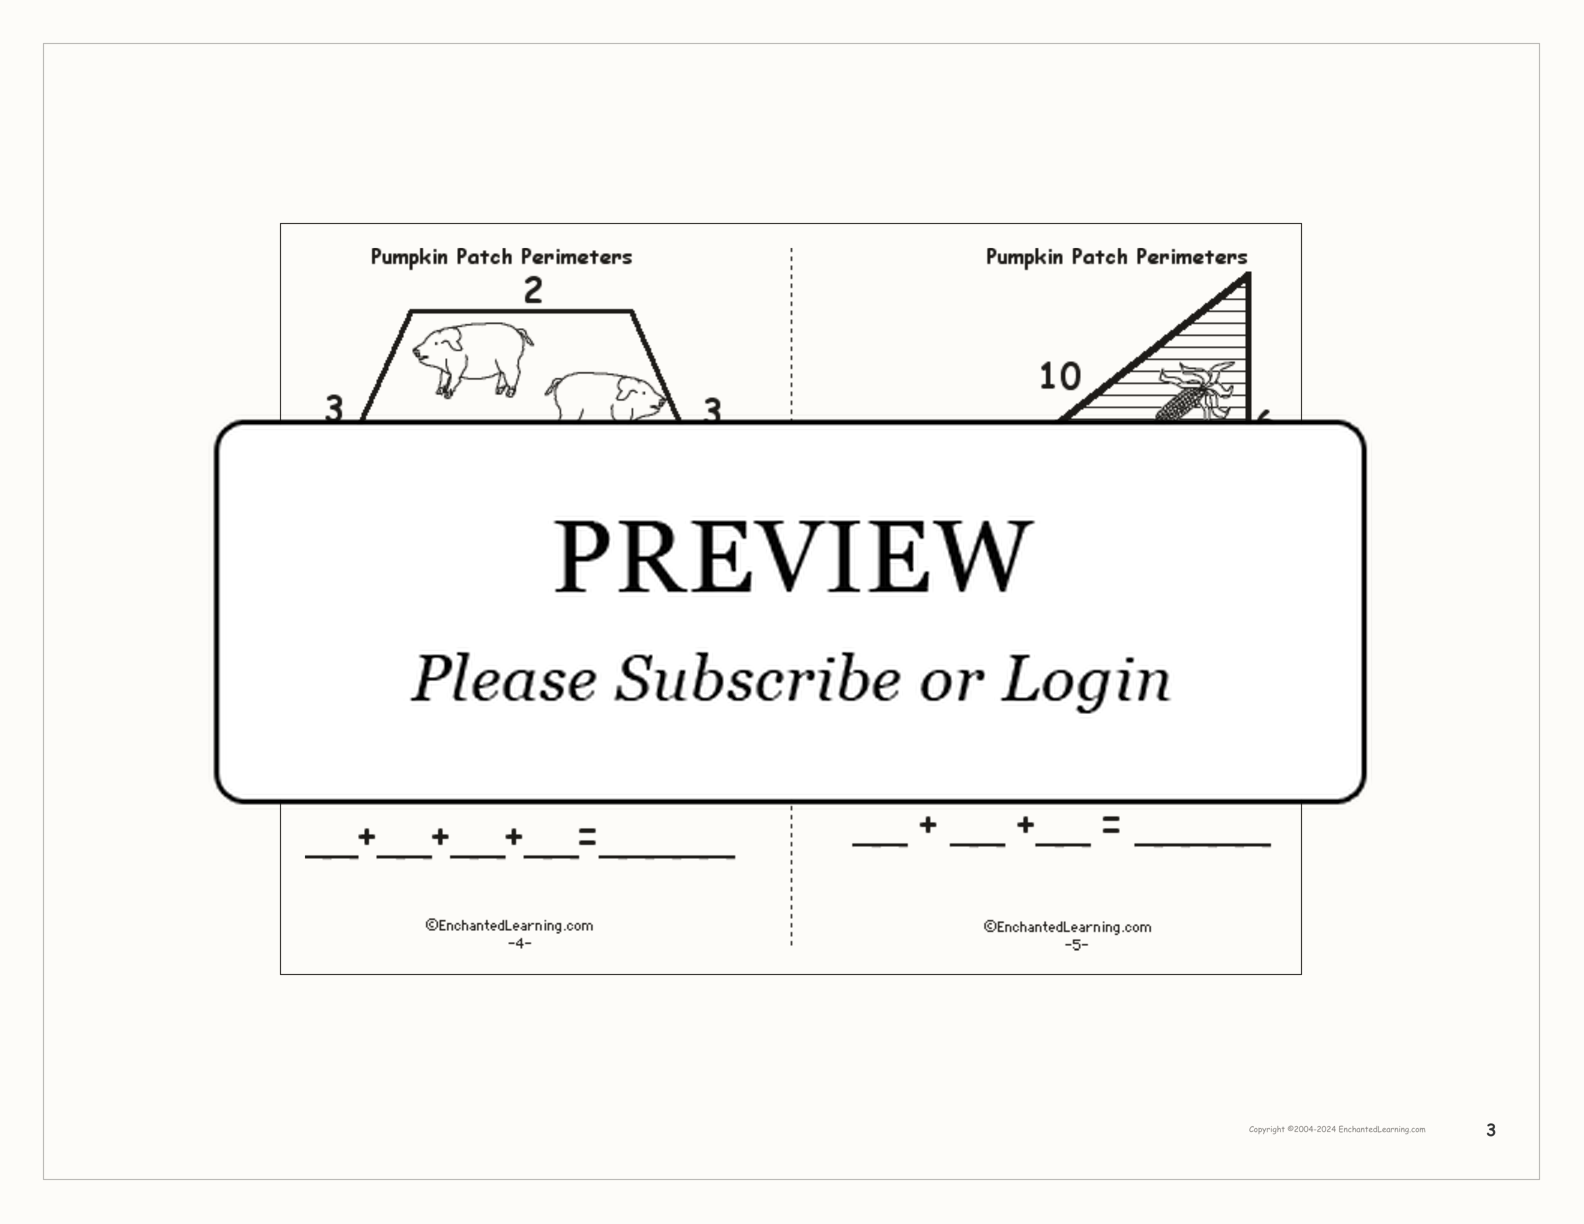 Pumpkin Patch Perimeters: A Printable Book interactive printout page 3